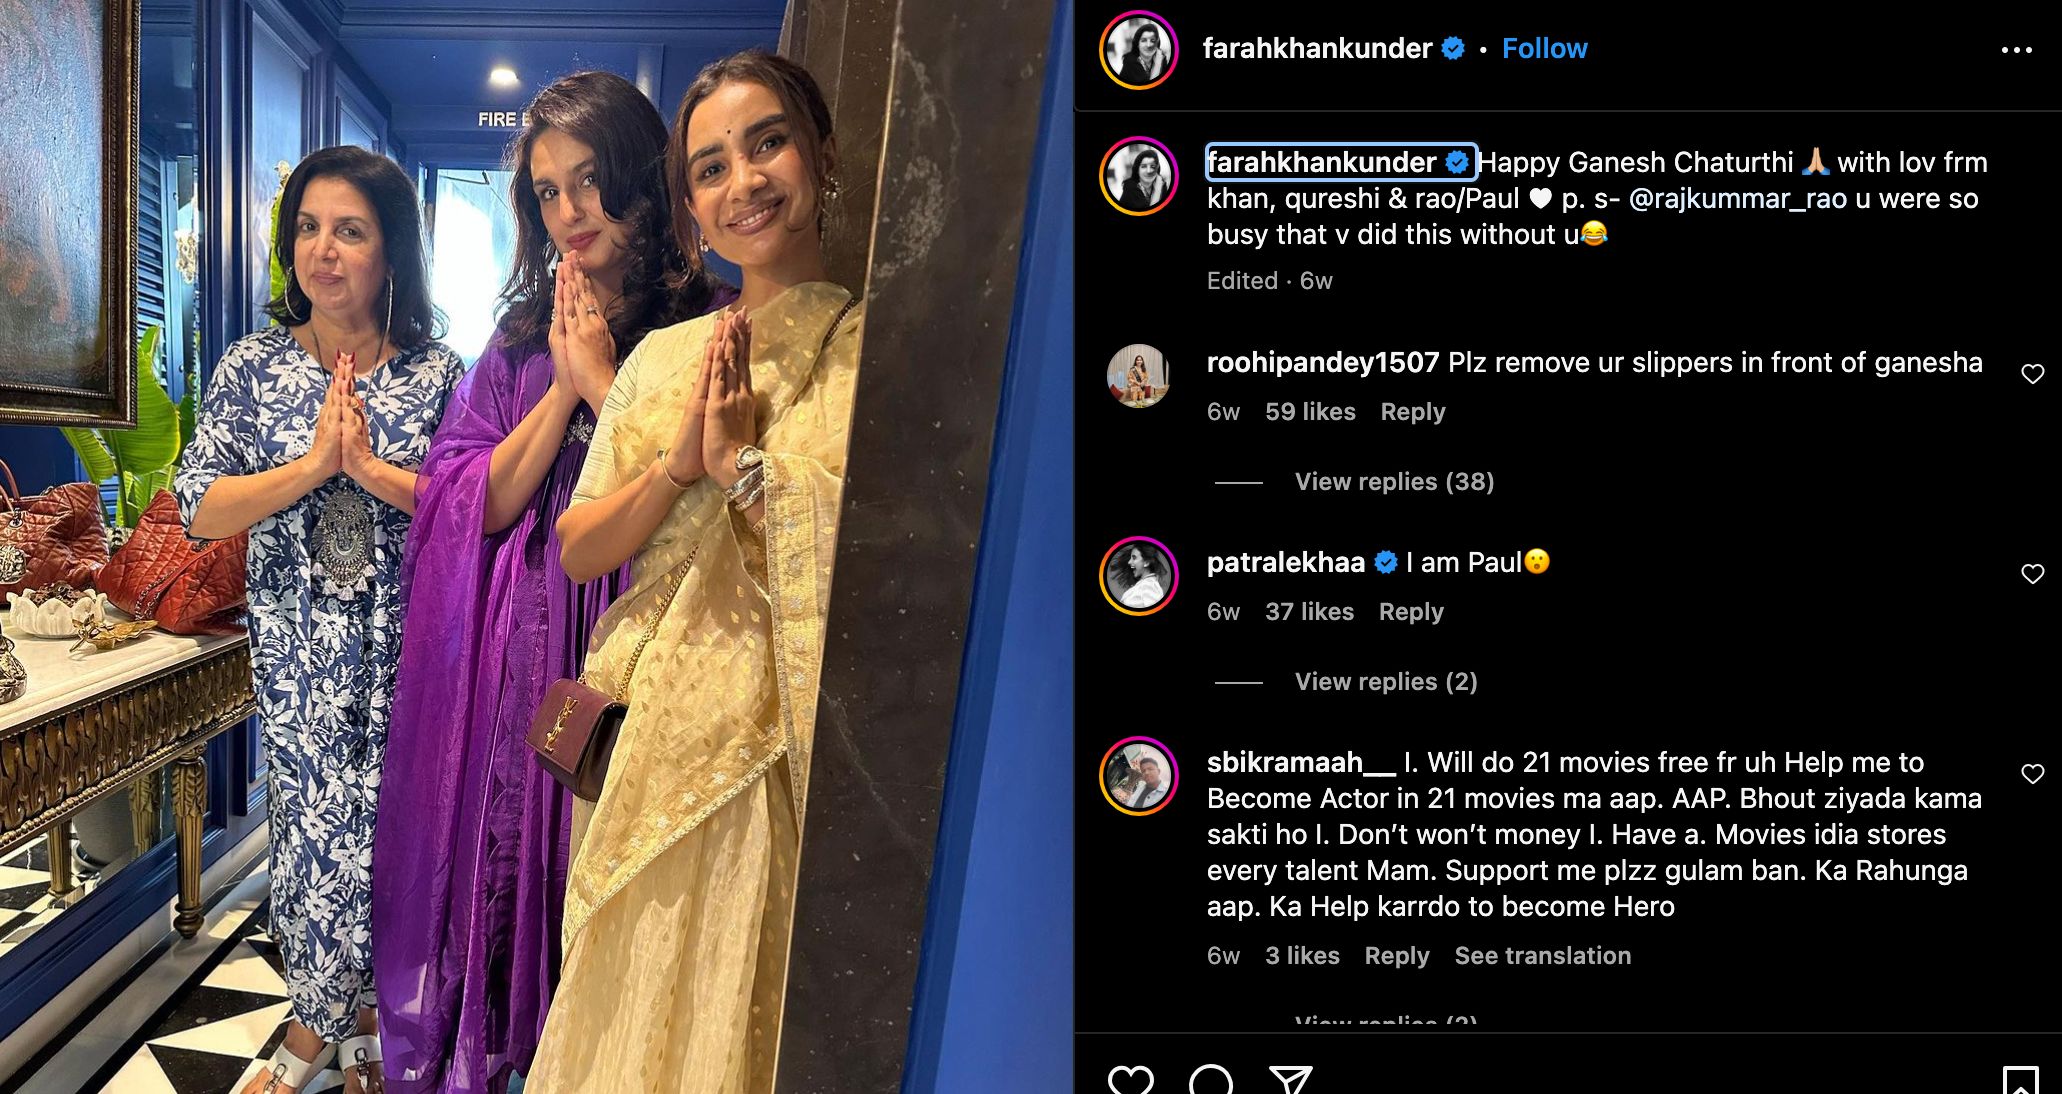 Farah Khan's Instagram post about celebrating Ganesh Chaturthi at home